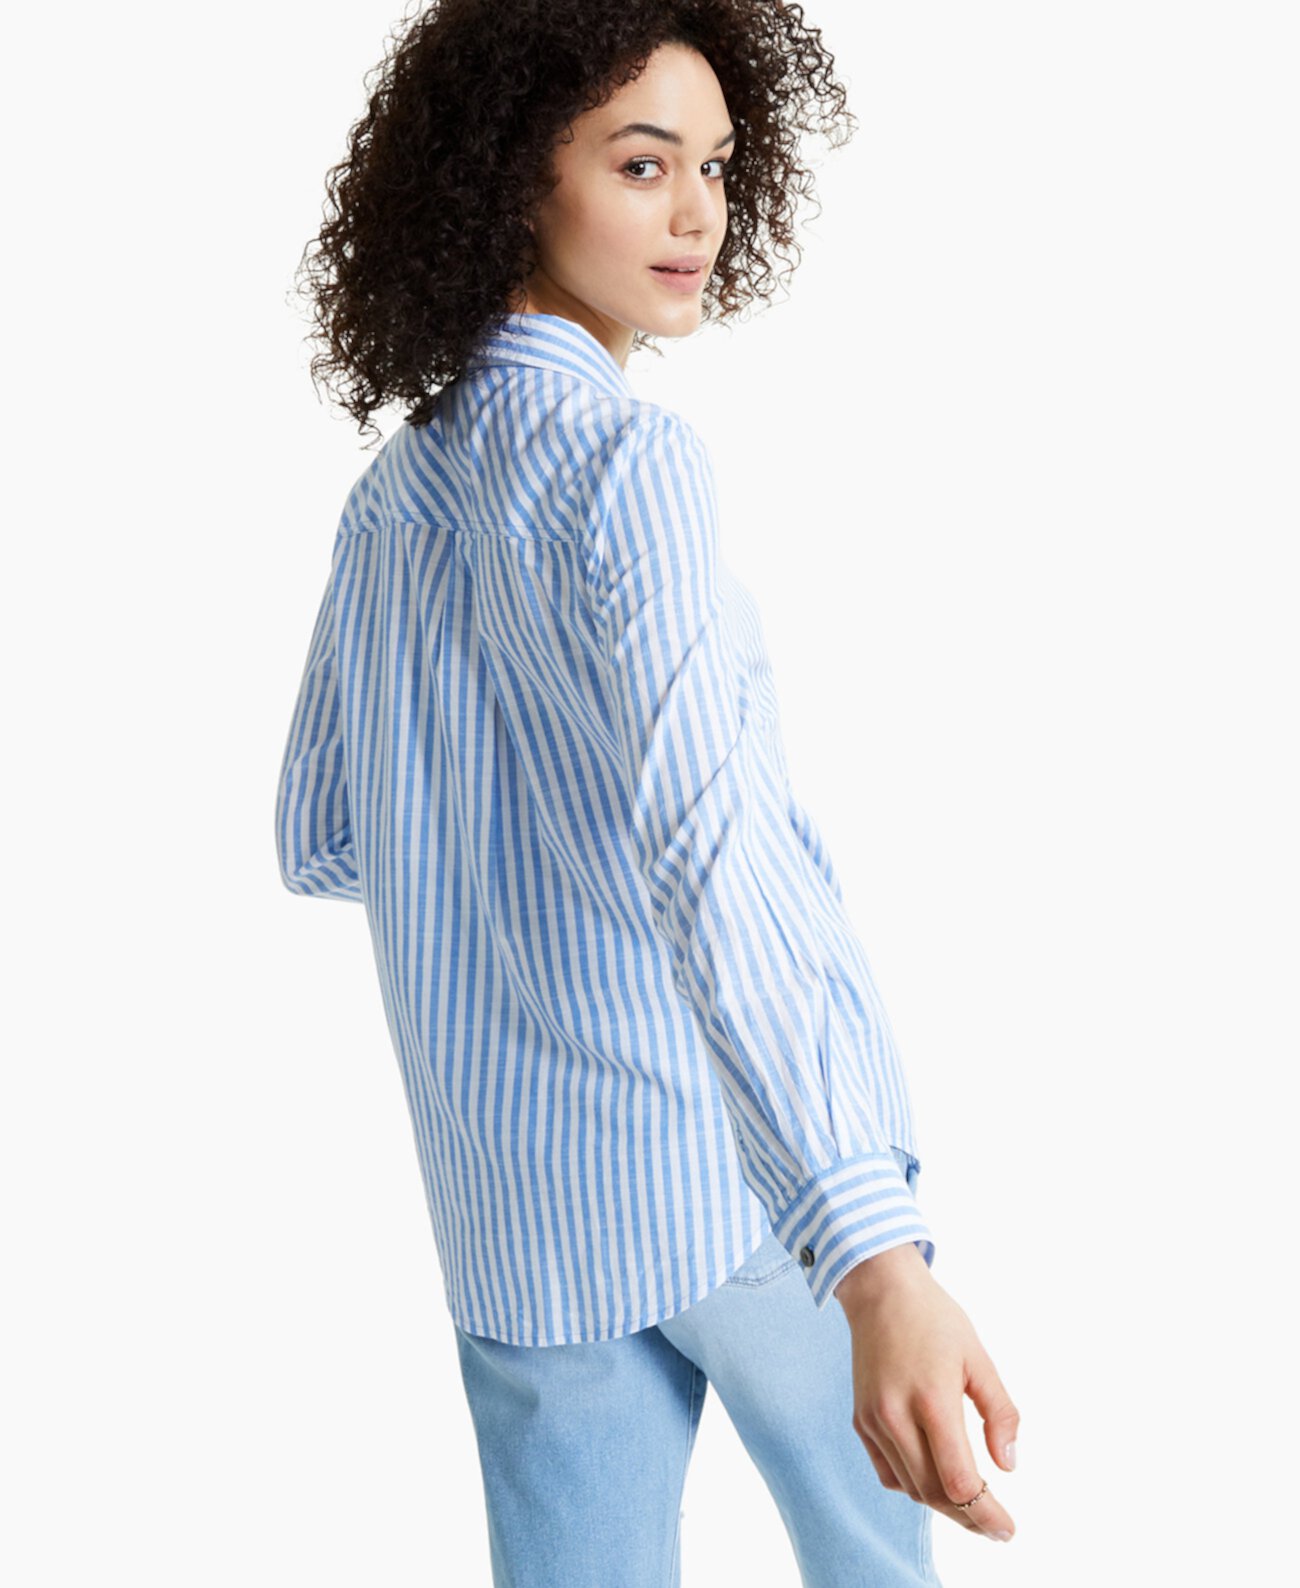 Рубашка-бойфренд в миниатюрную полоску, создана для Macy's Style & Co